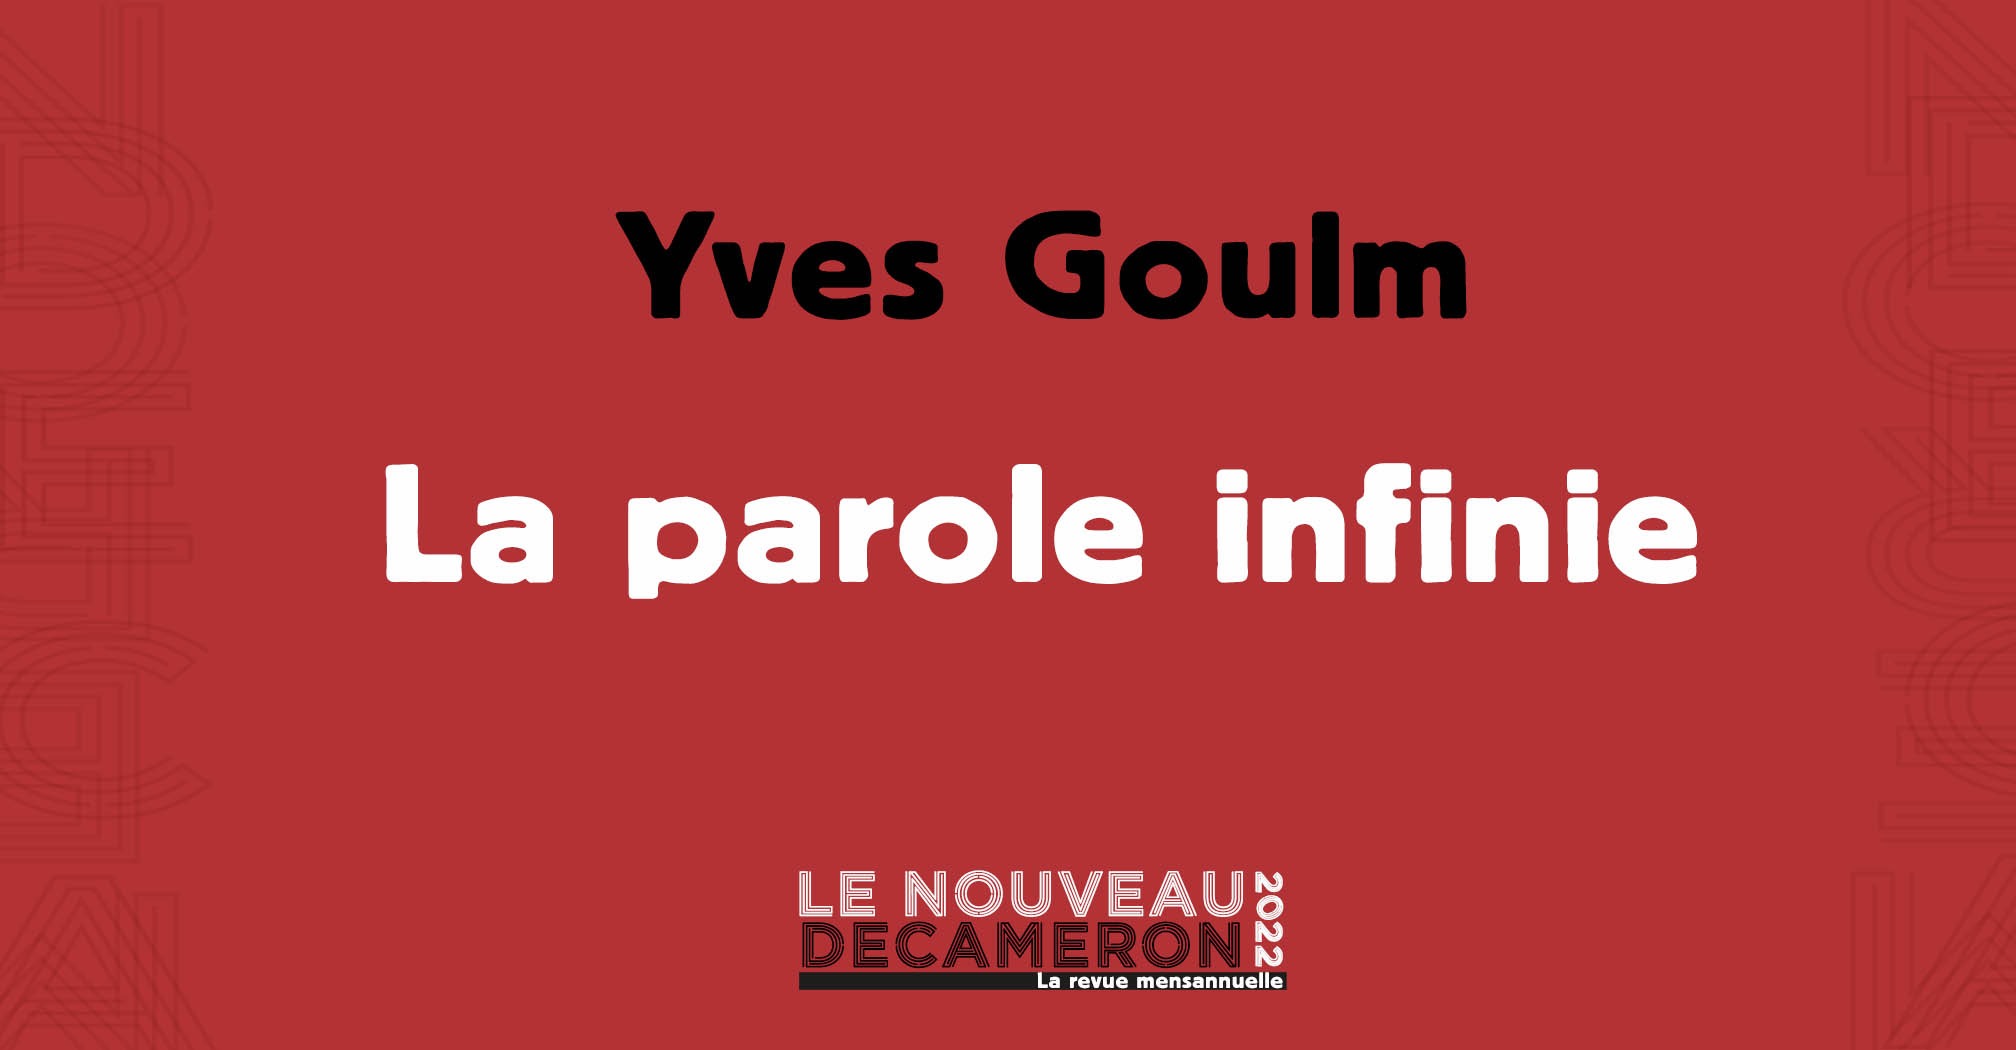 Yves Goulm - La parole infinie